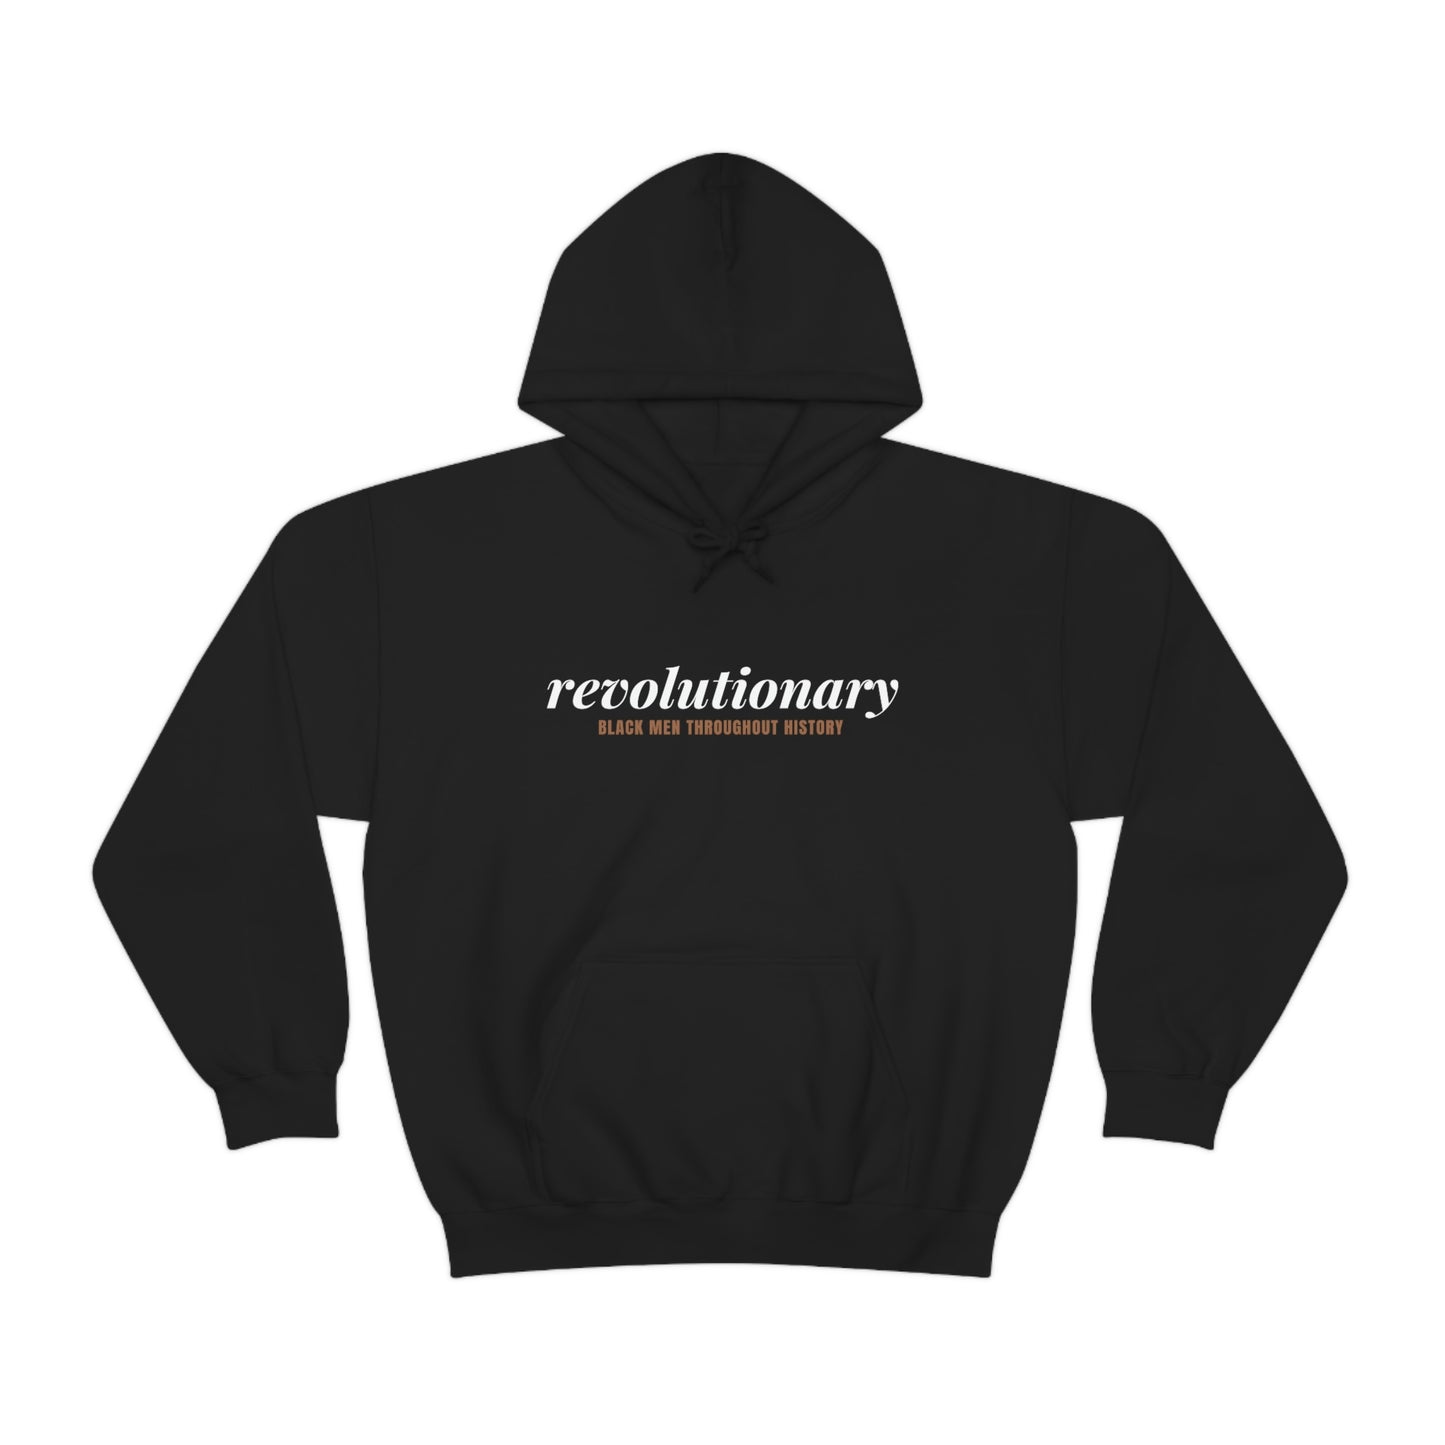 "Revolutionary Black Men" Unisex Heavy Blend™ Hooded Sweatshirt - Black, Chocolate, Navy Blue, Dark Gray, & Hunter Green Available